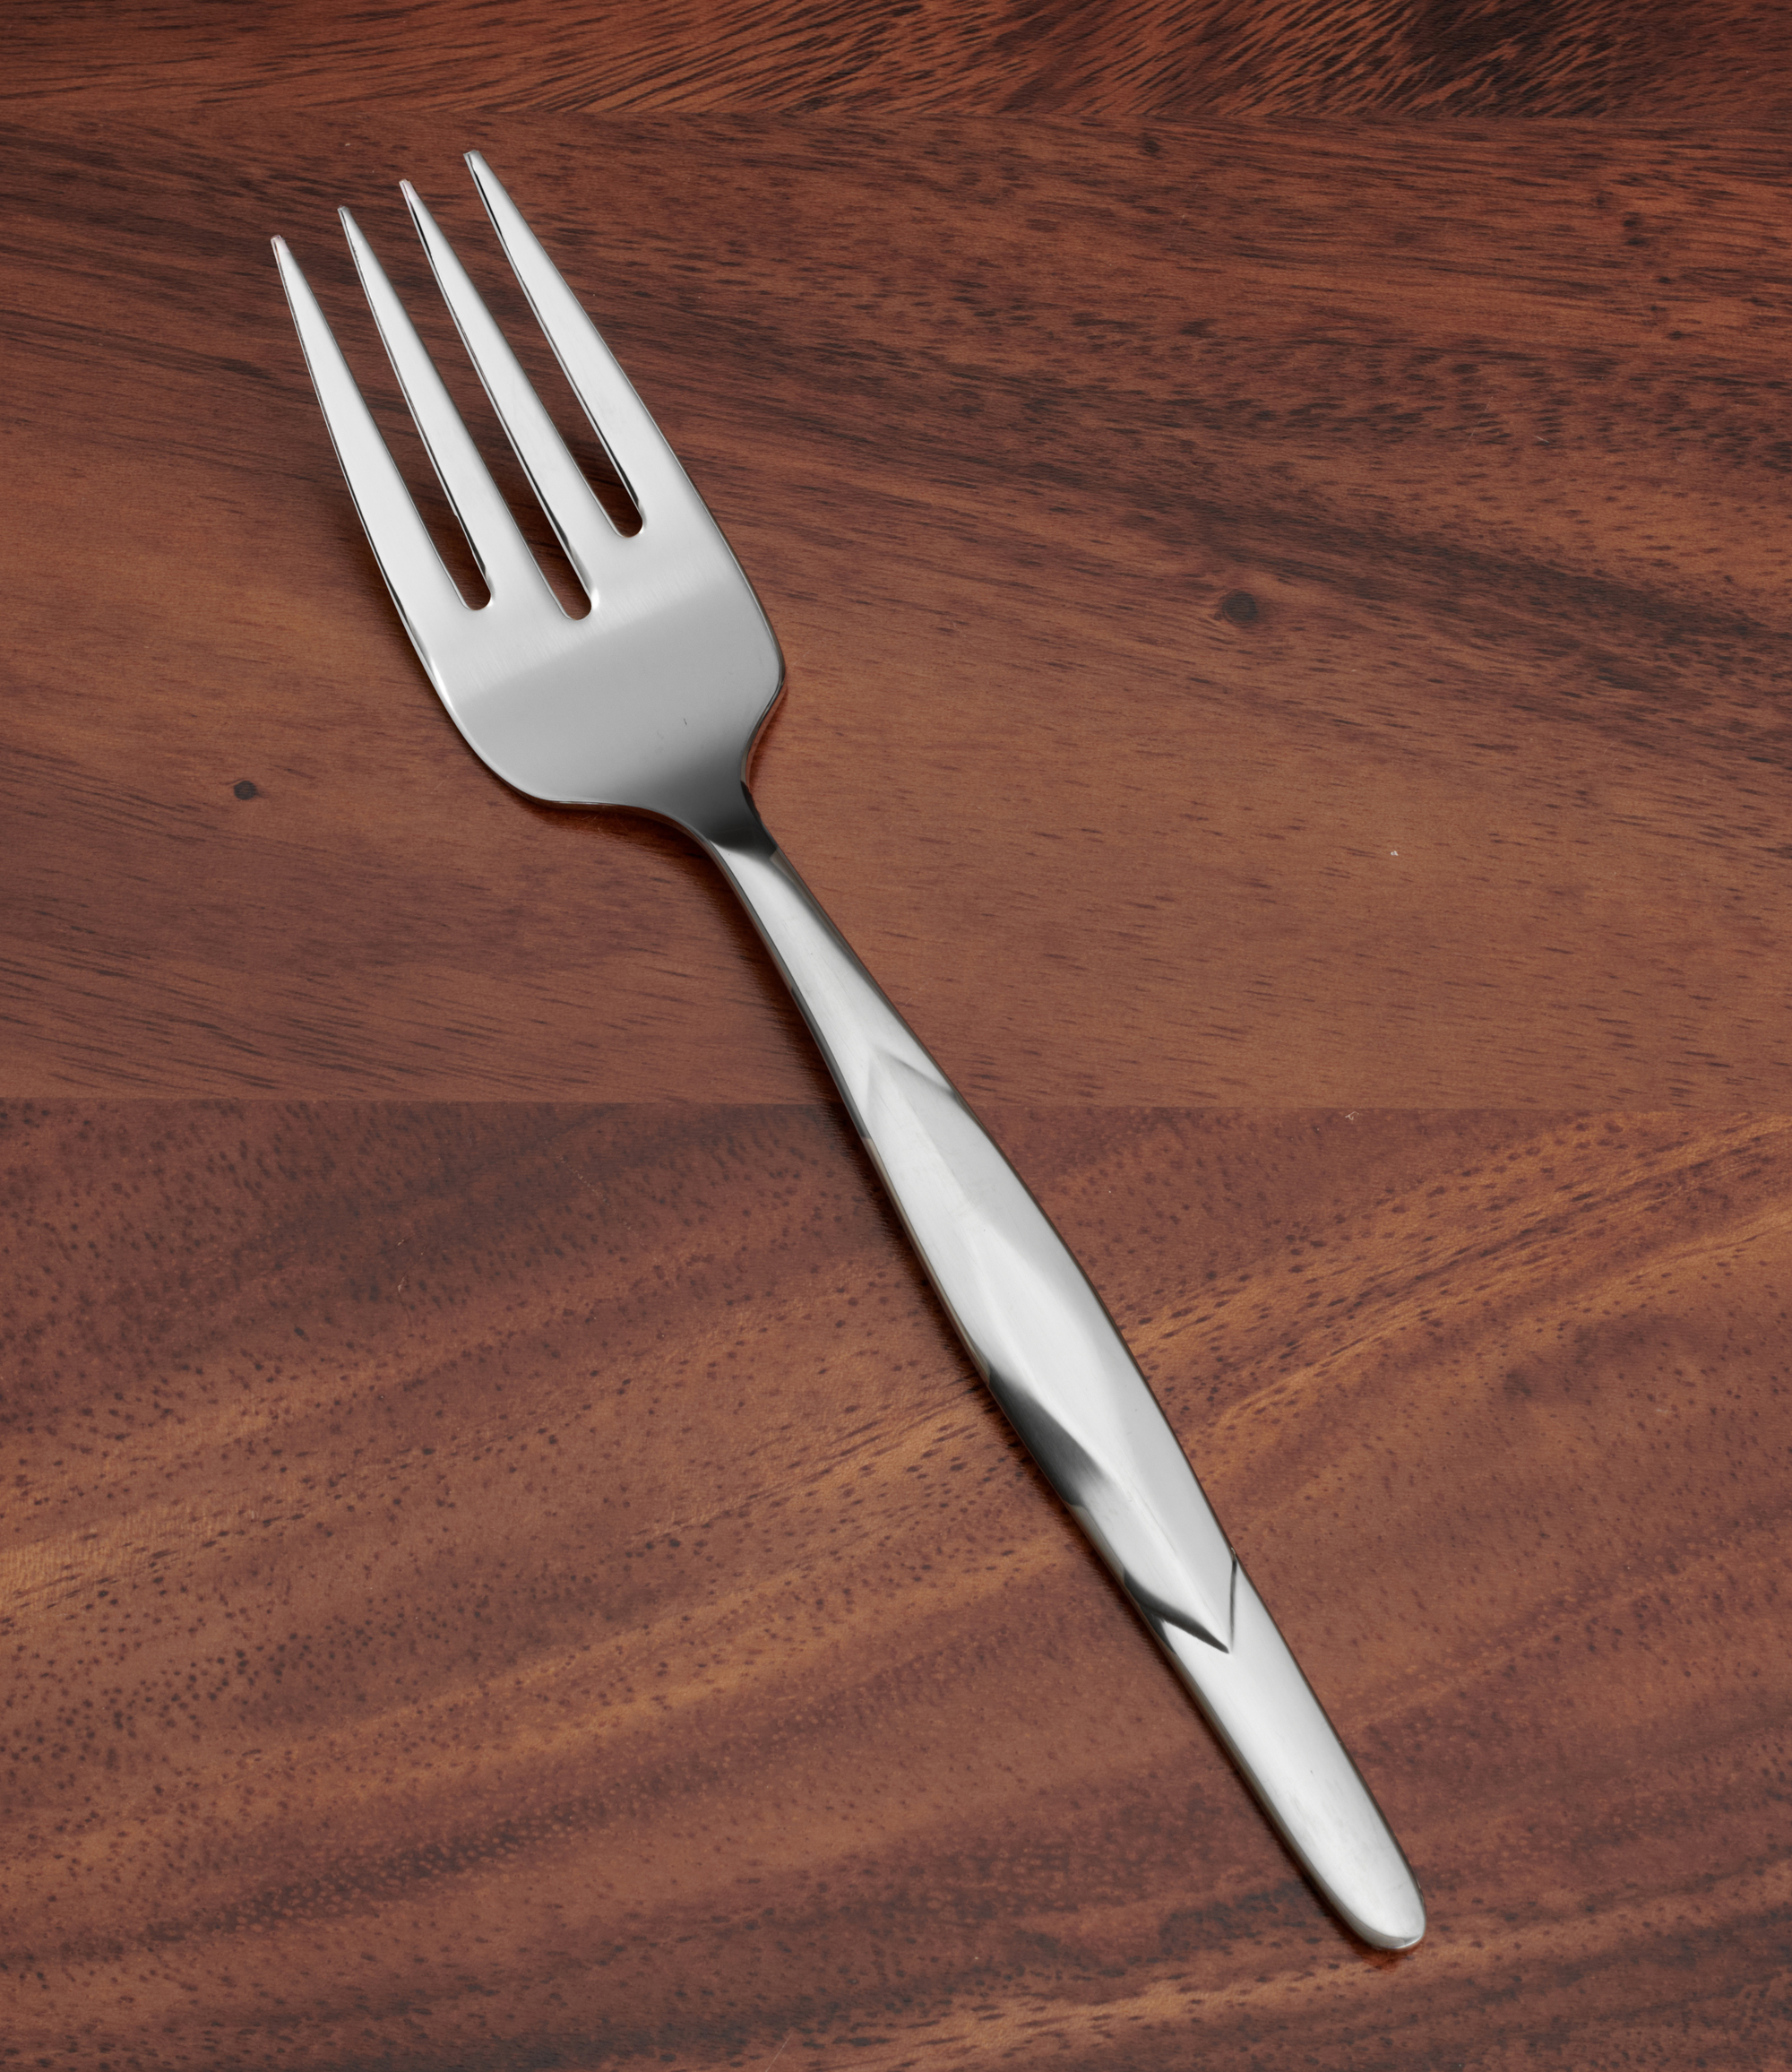 Long Handle Dinner Forks Stainless Steel Cutlery Steak Forks Tableable US 